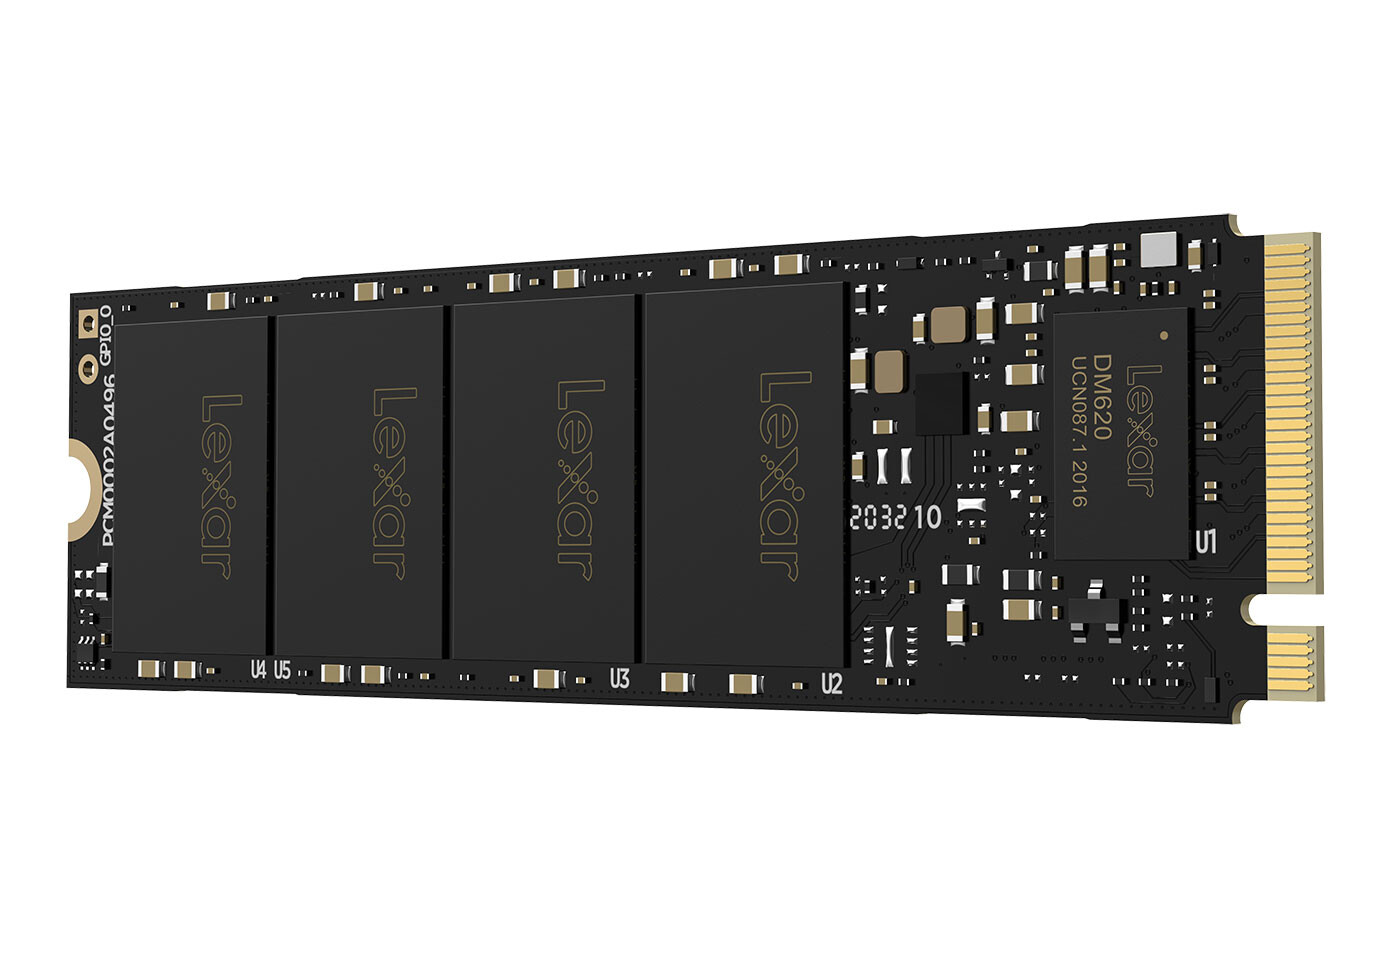 Lexar Announces New NM620 M.2 2280 PCIe Gen3x4 NVMe SSD | TechPowerUp